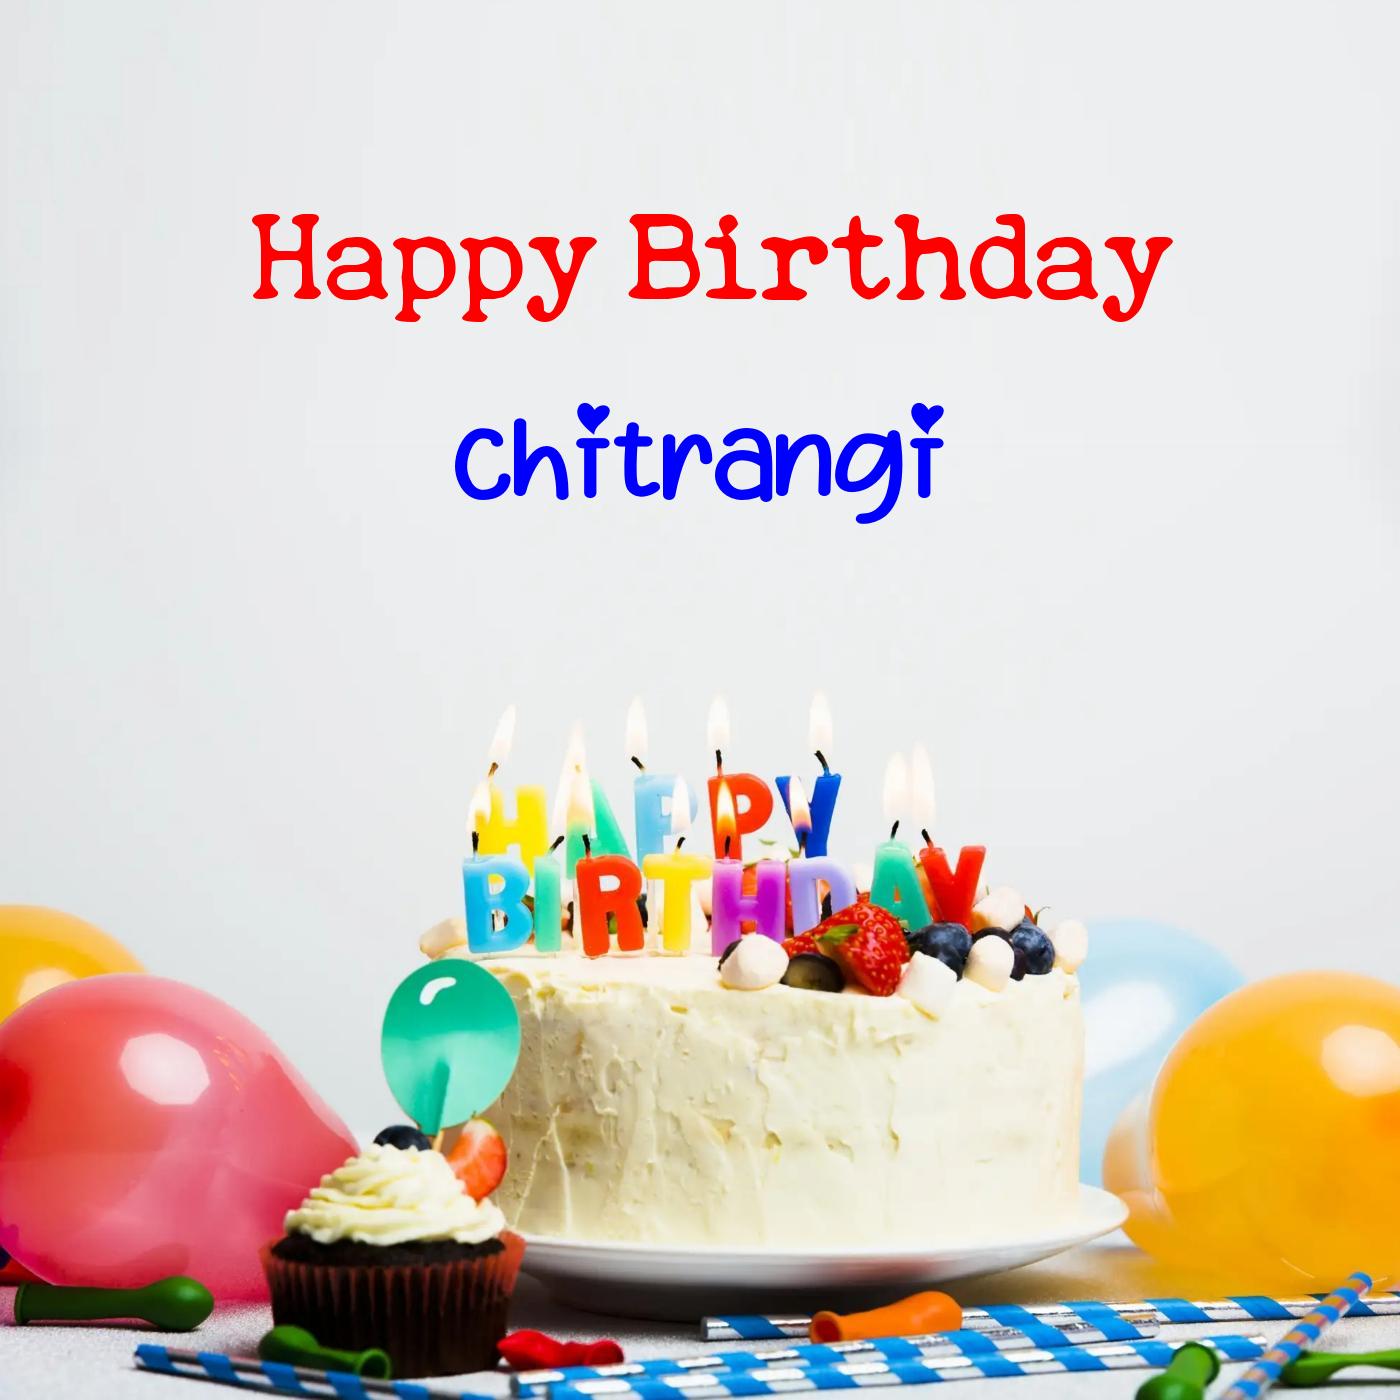 Happy Birthday Chitrangi Cake Balloons Card